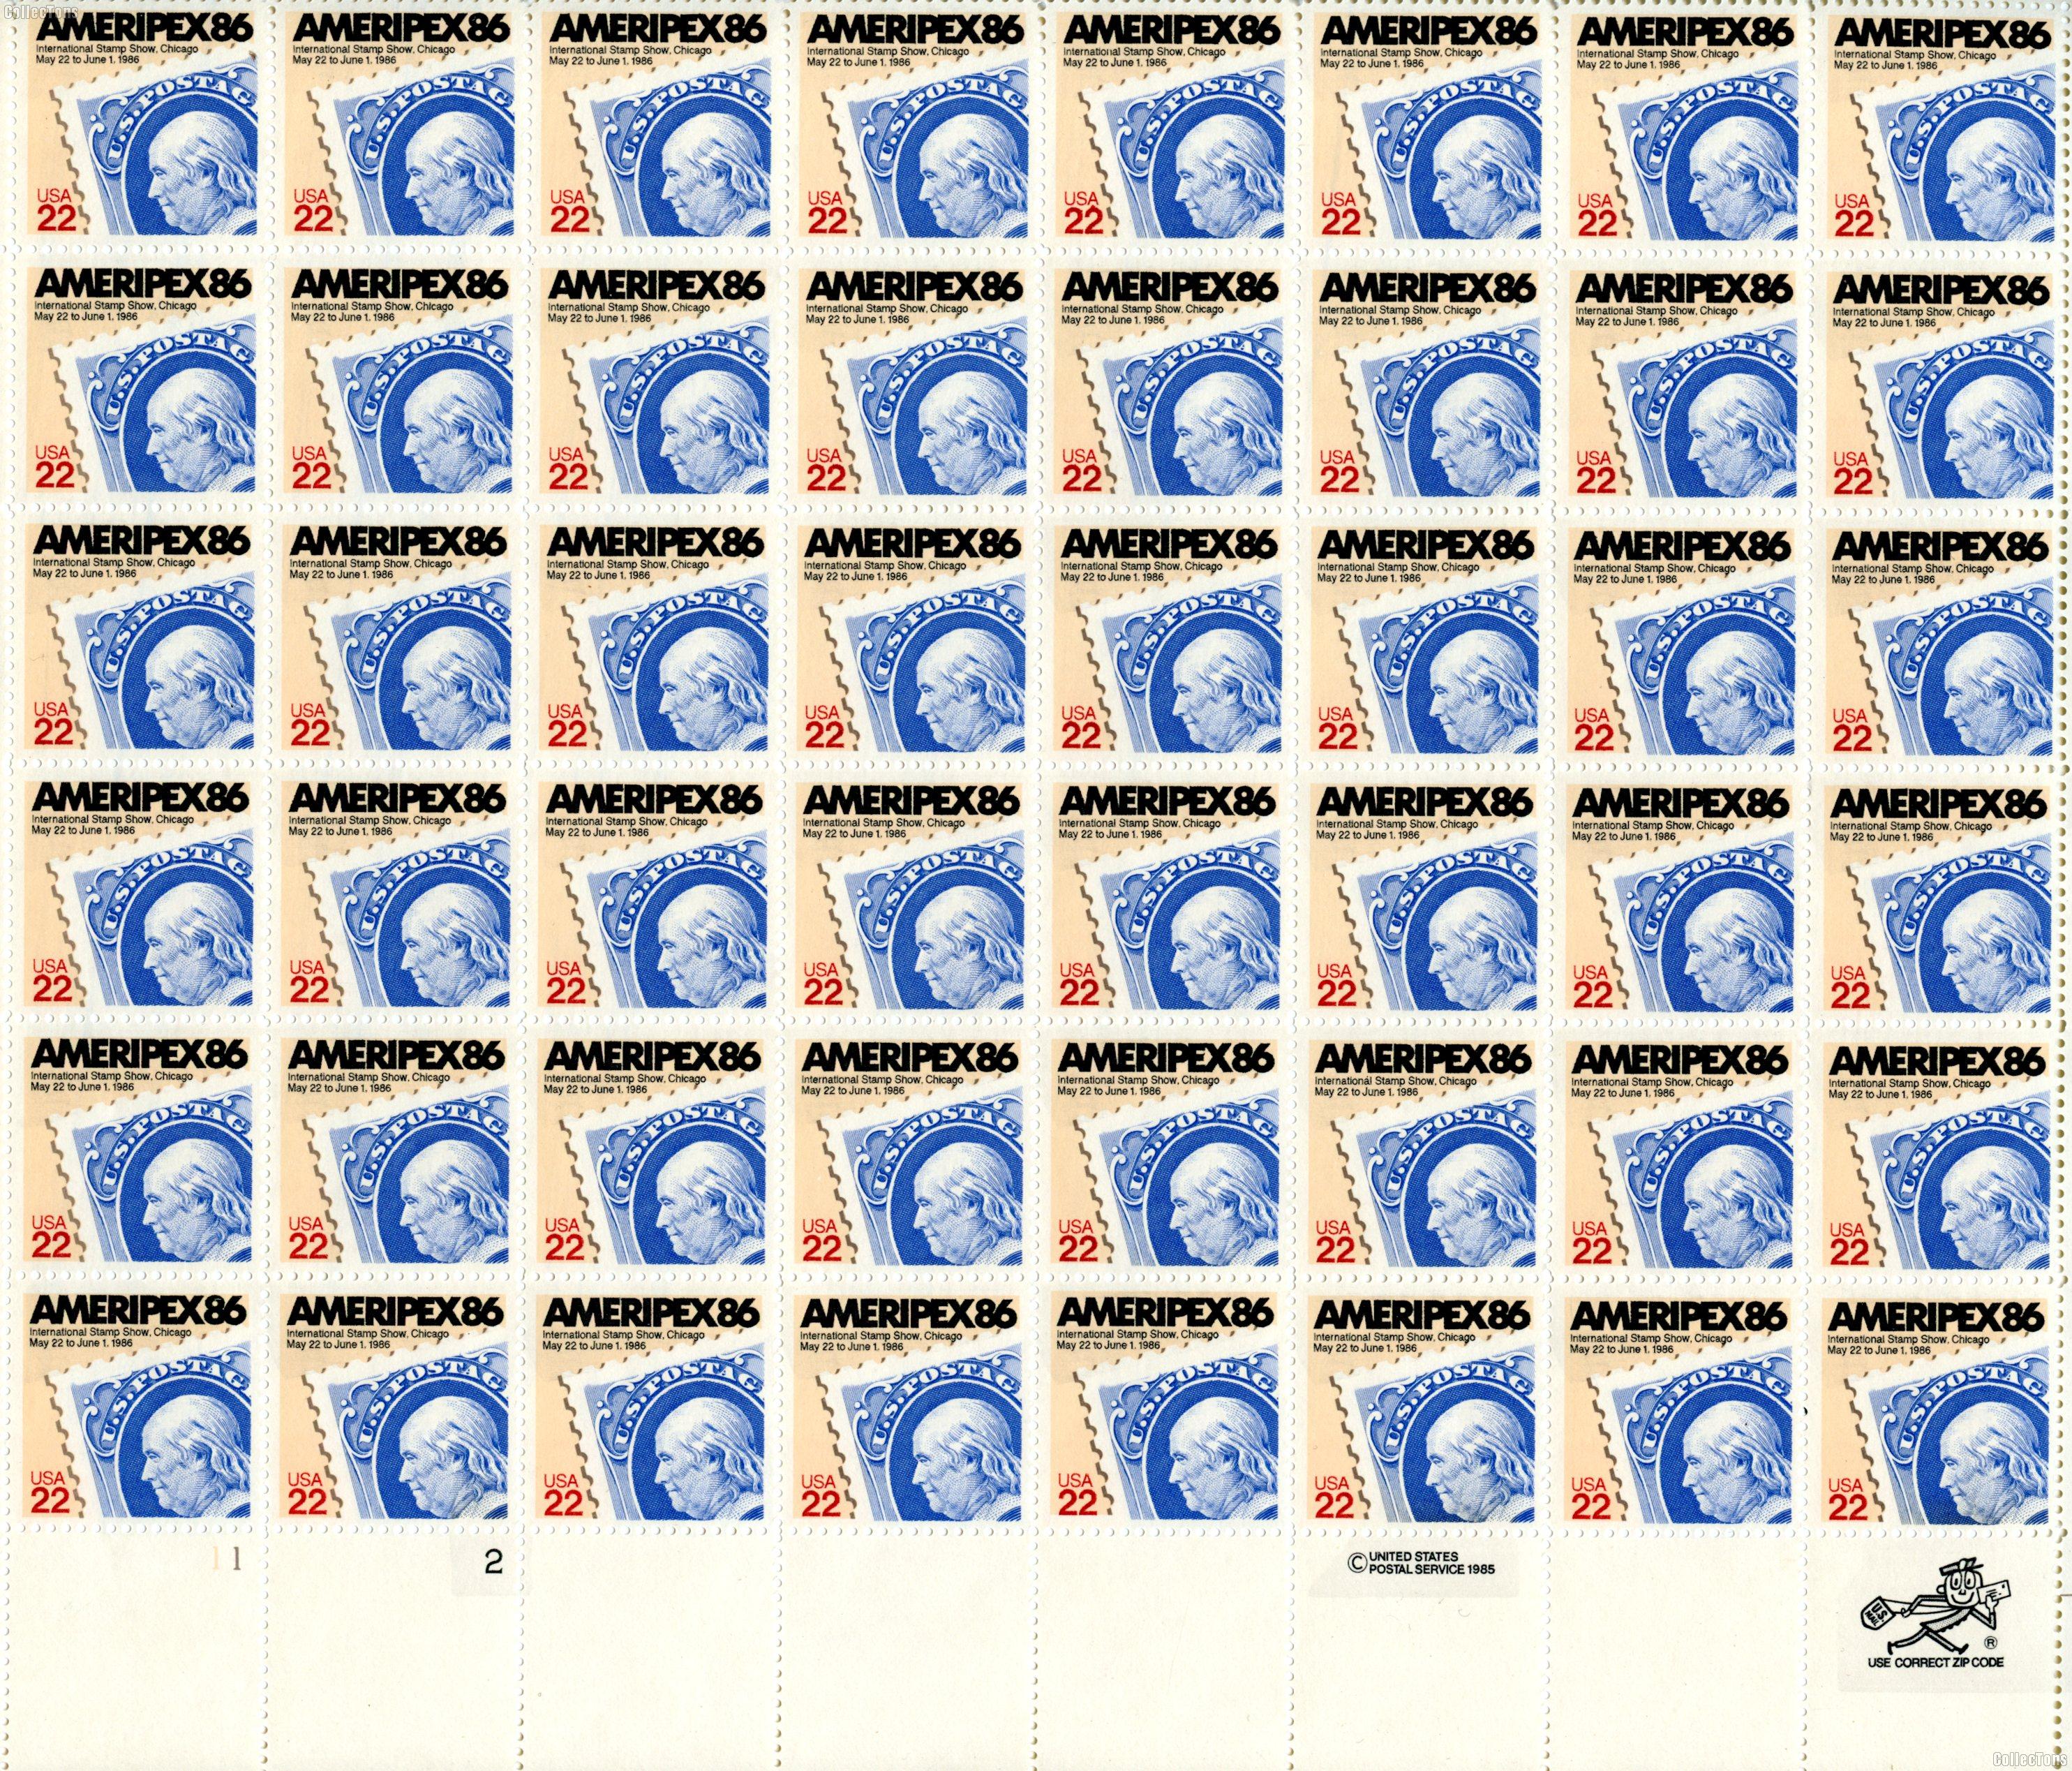 1985 Ameripex 22 Cent US Postage Stamp MNH Sheet of 48 Scott #2145